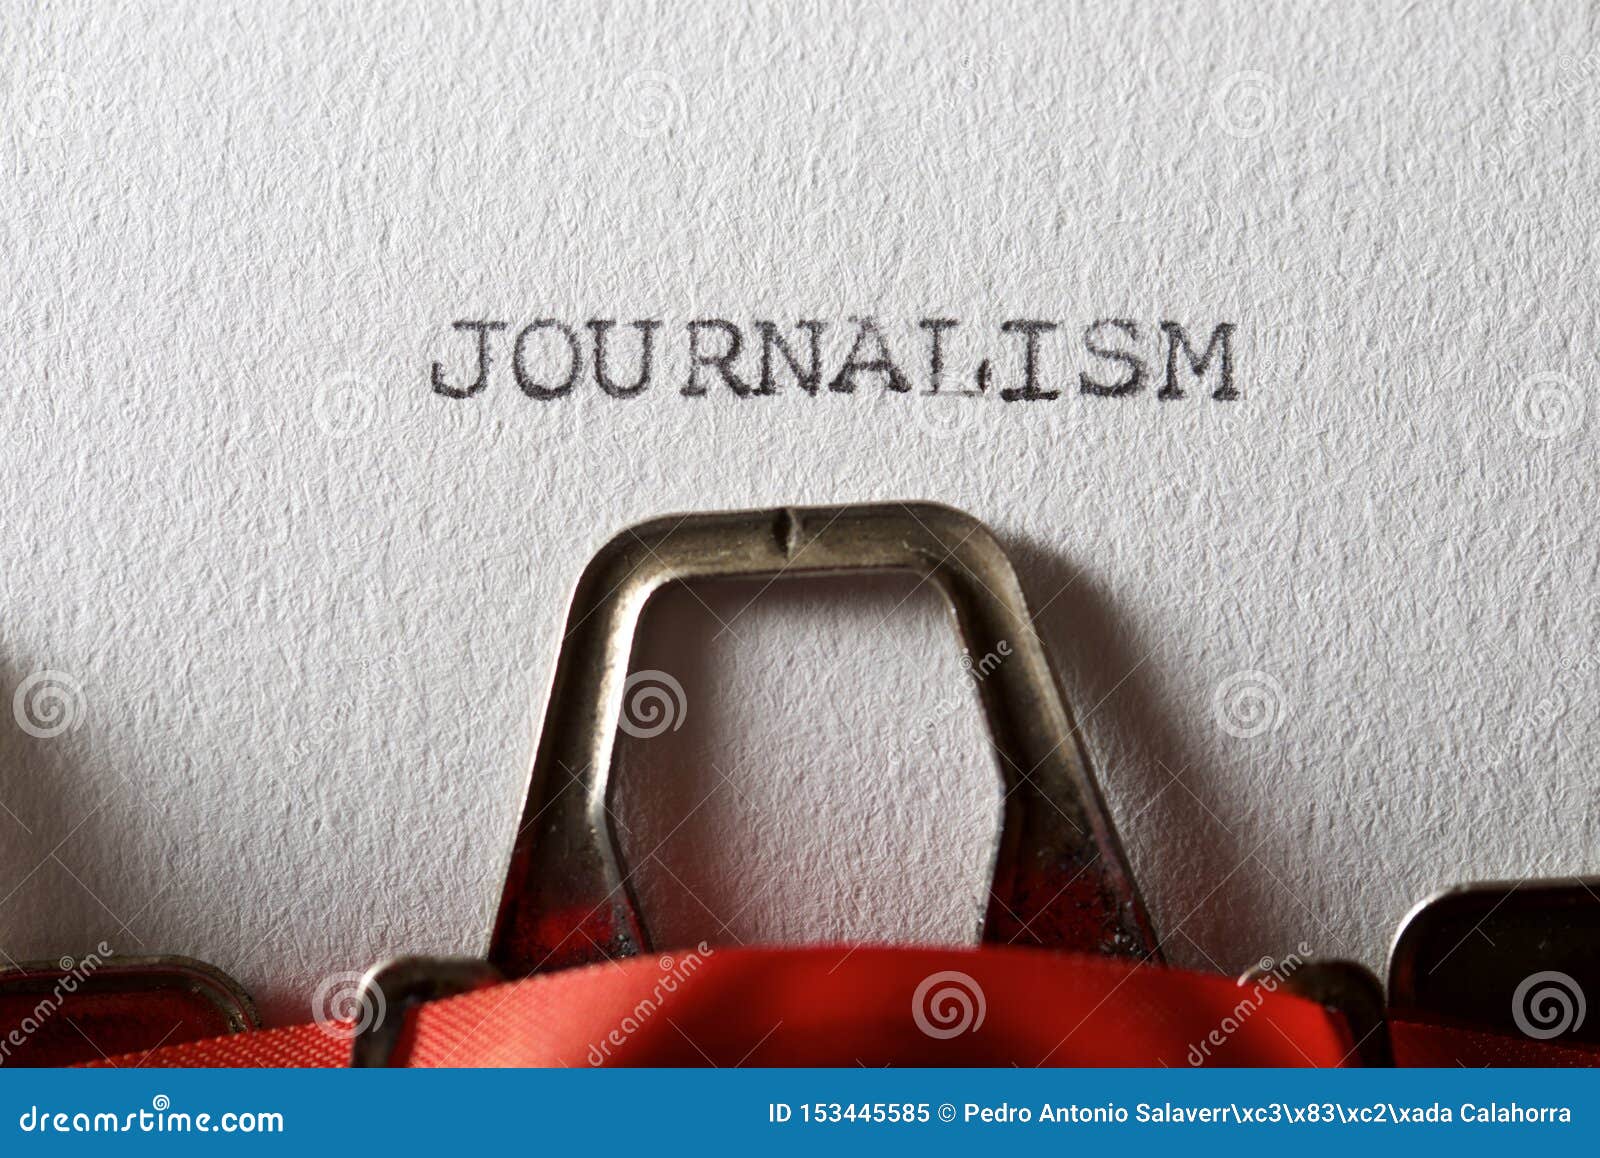 journalism concept view